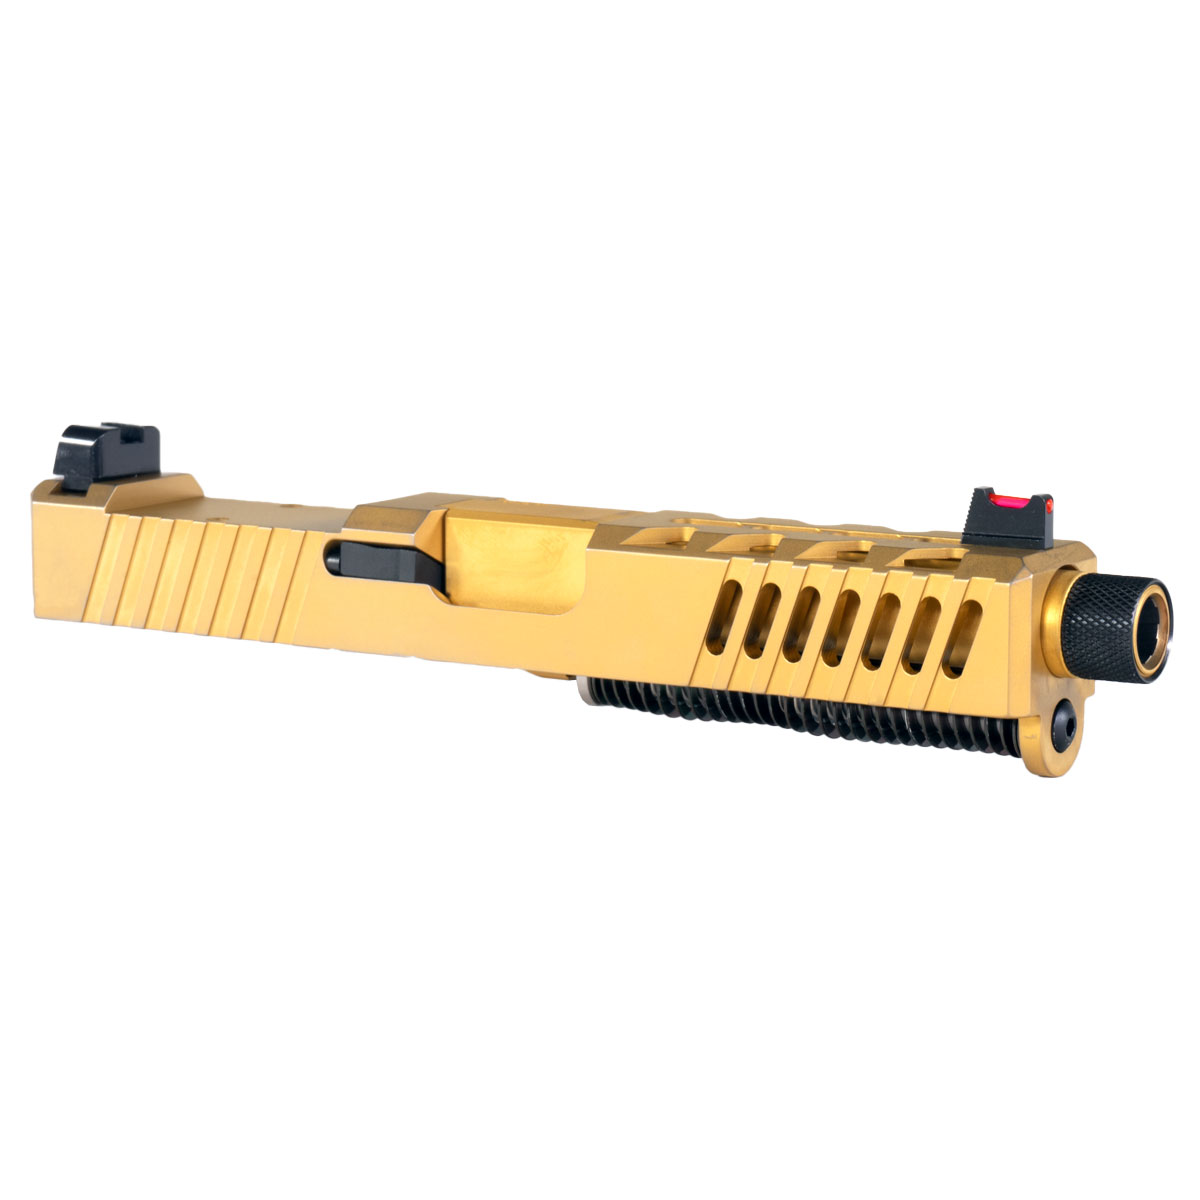 MMC 'AU-197' 9mm Complete Slide Kit - Glock 19 Gen 1-3 Compatible - Fire Sale